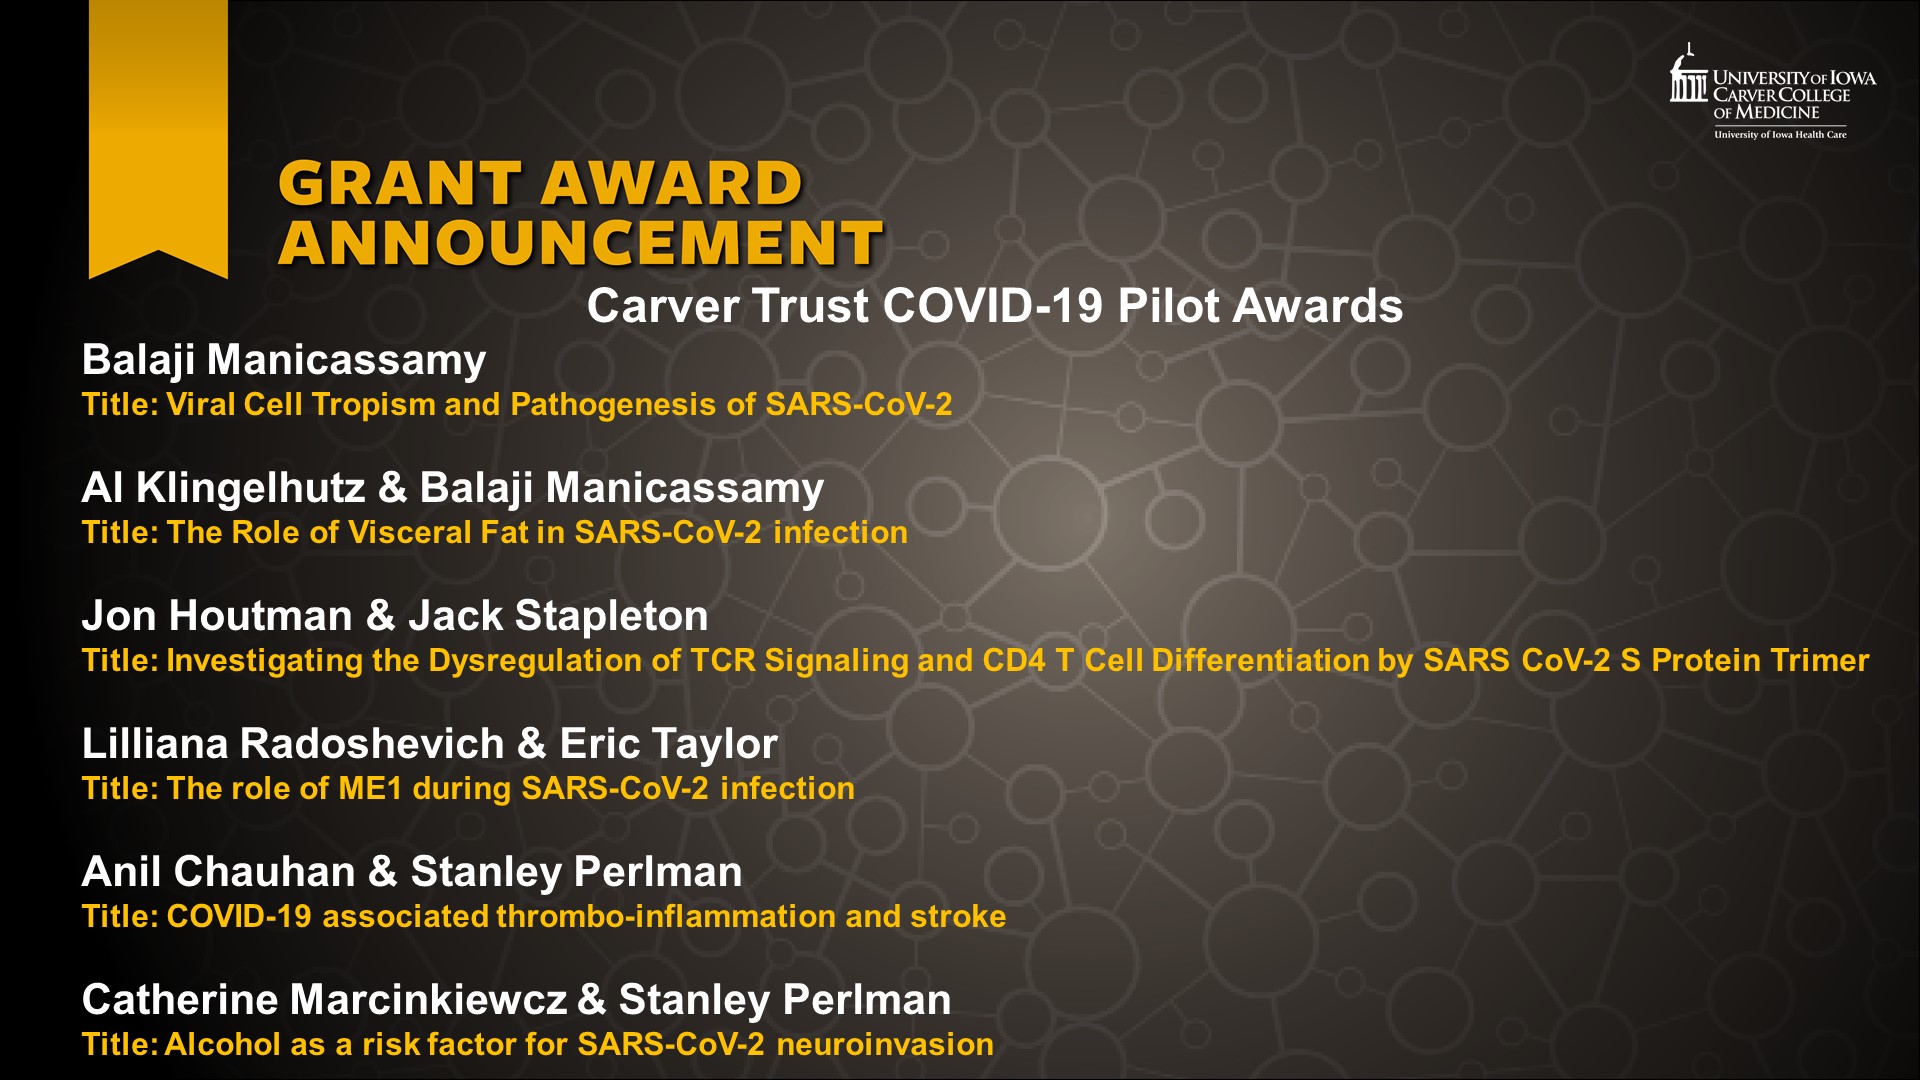 Carver Trust COVID-19 Pilot Awards